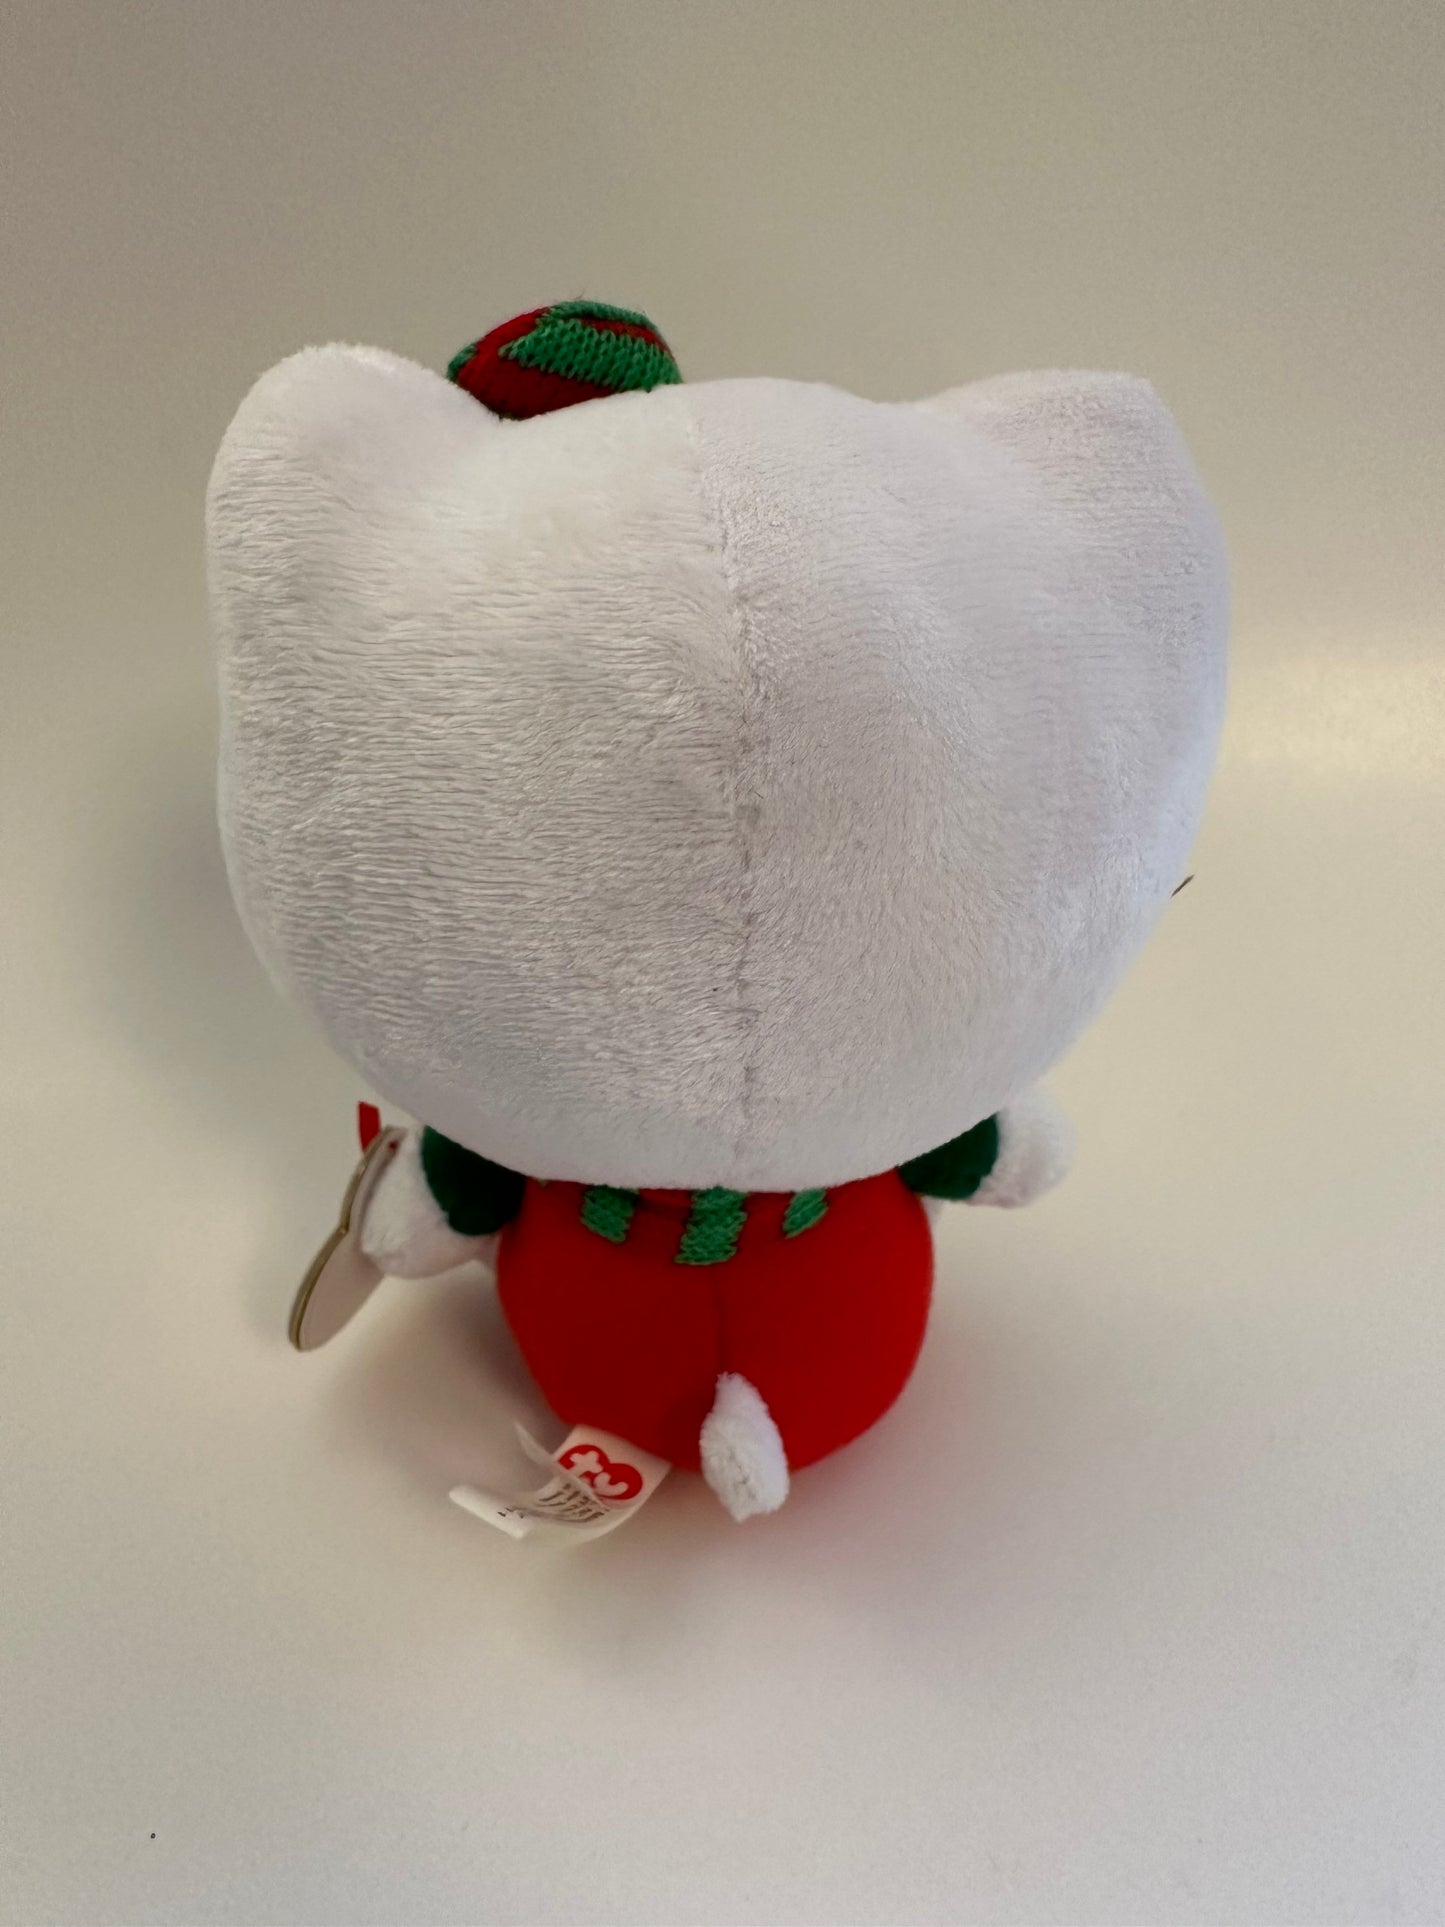 TY Beanie Baby “Hello Kitty” the Christmas Holiday Themed Hello Kitty Plush (5.5 inch)